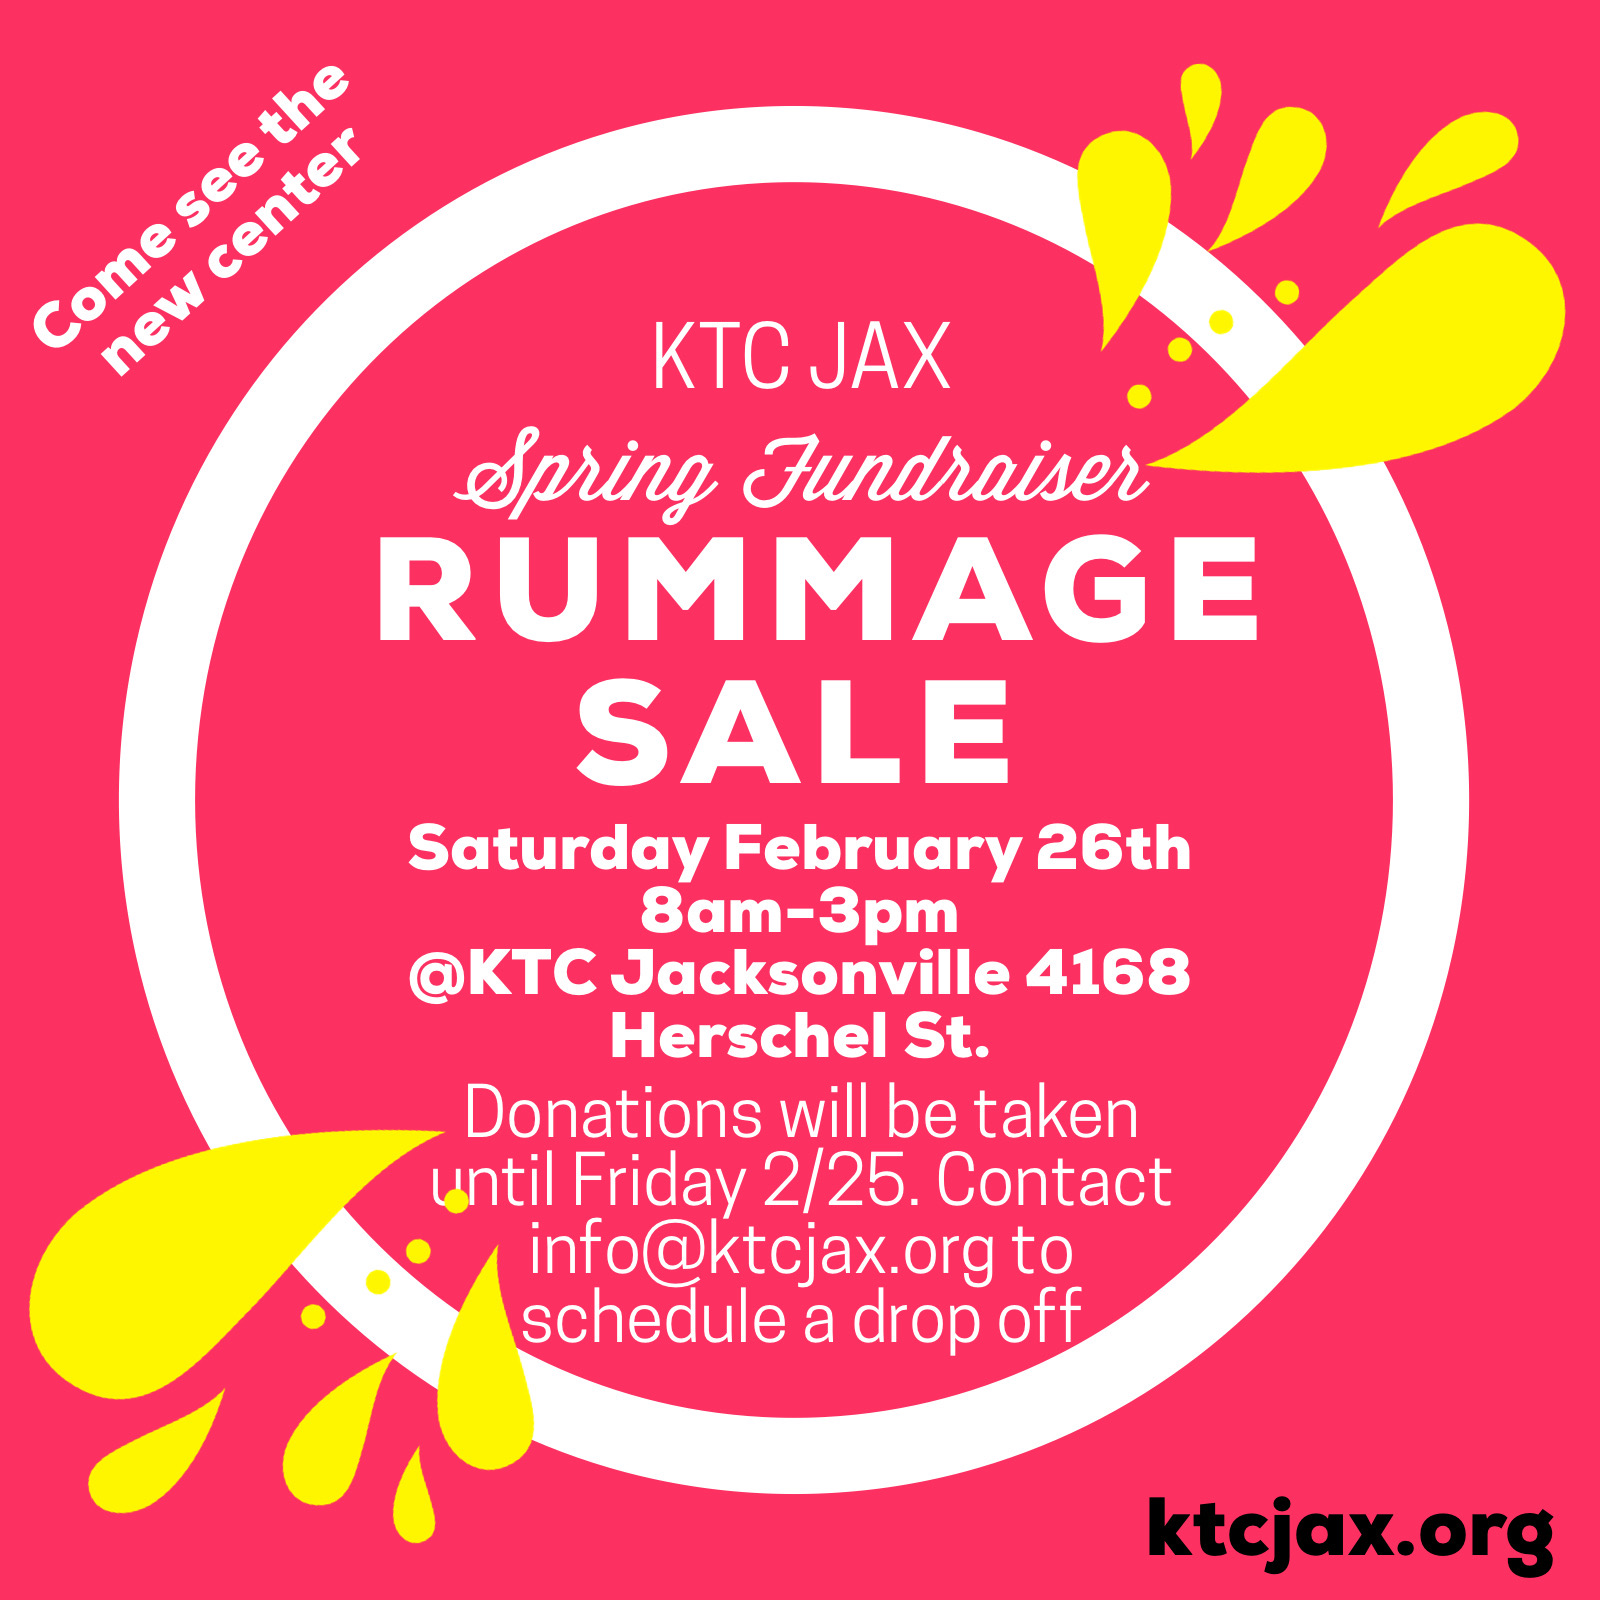 Rummage Sale Saturday February 26th